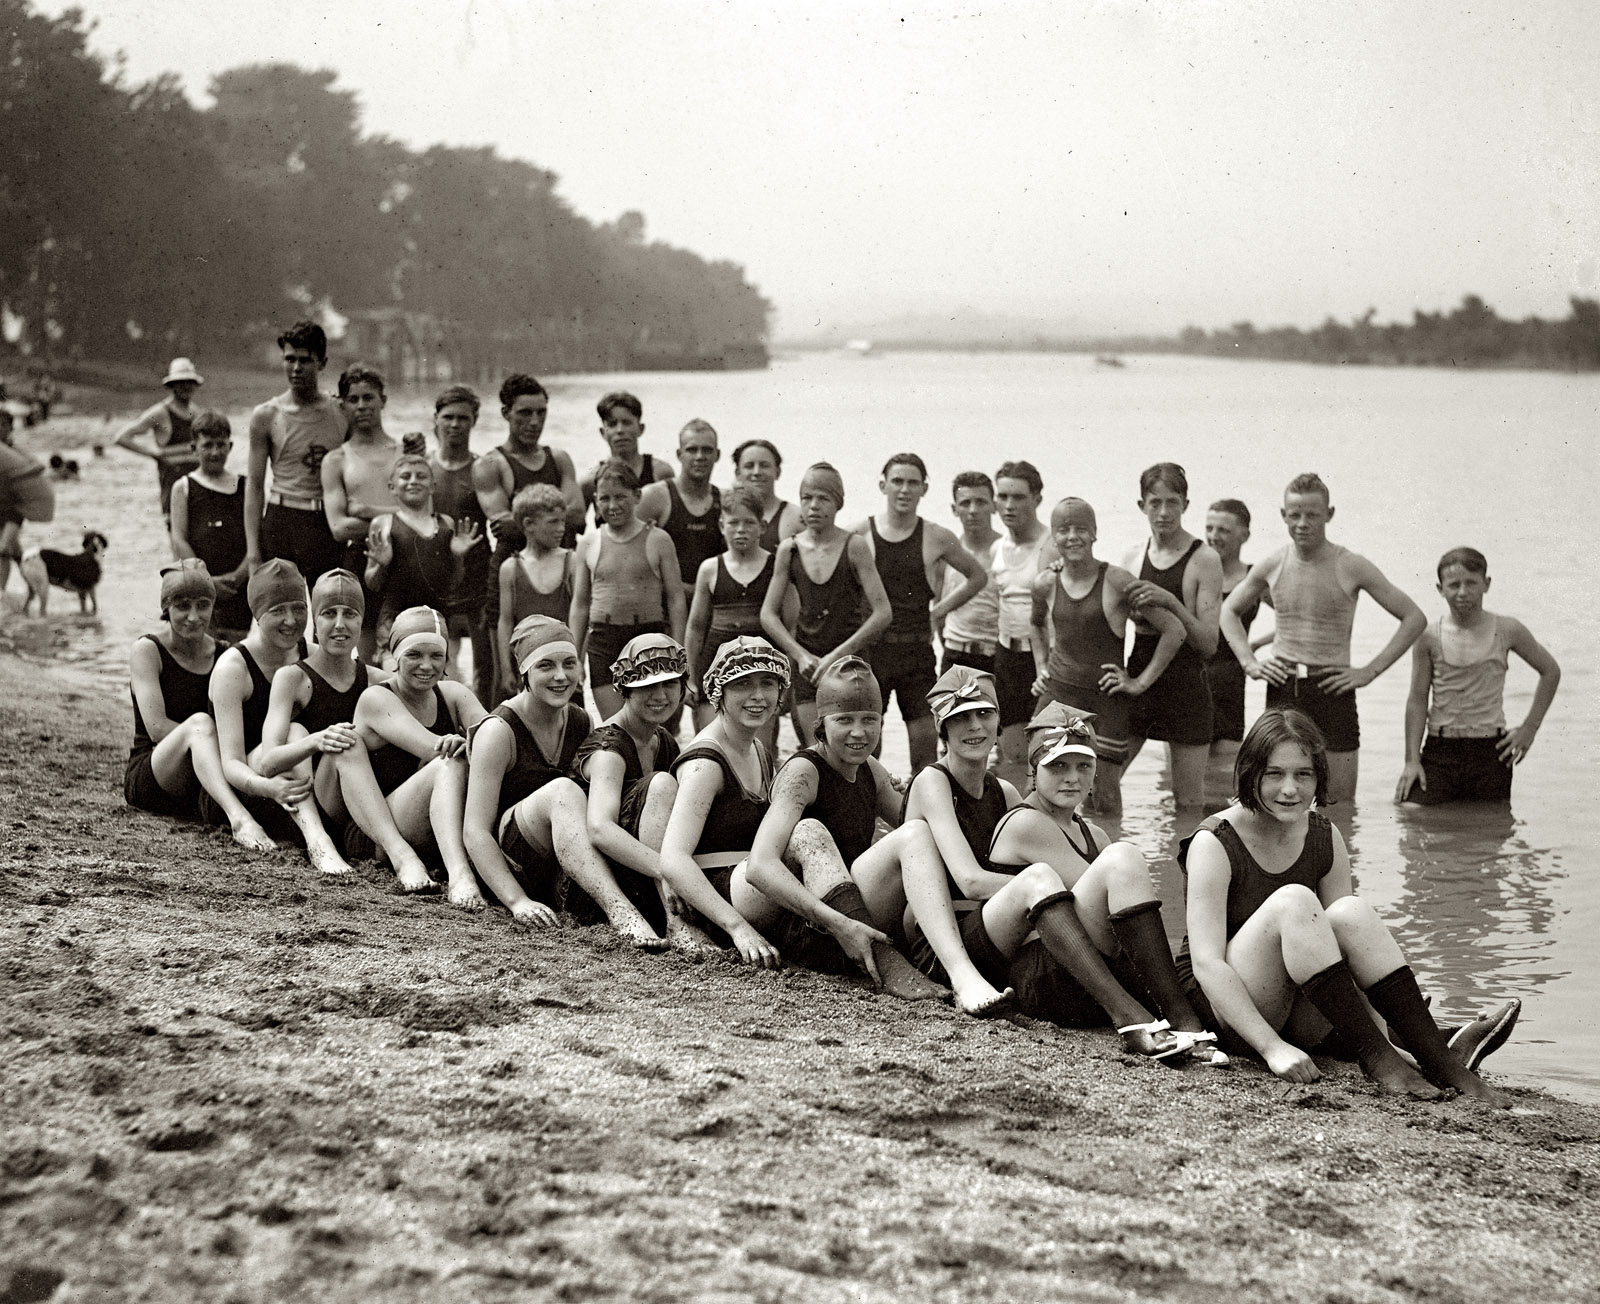 June 16, 1923. Washington, D.C. "Arlington bathing beach." View full size. National Photo Company Collection glass negative.